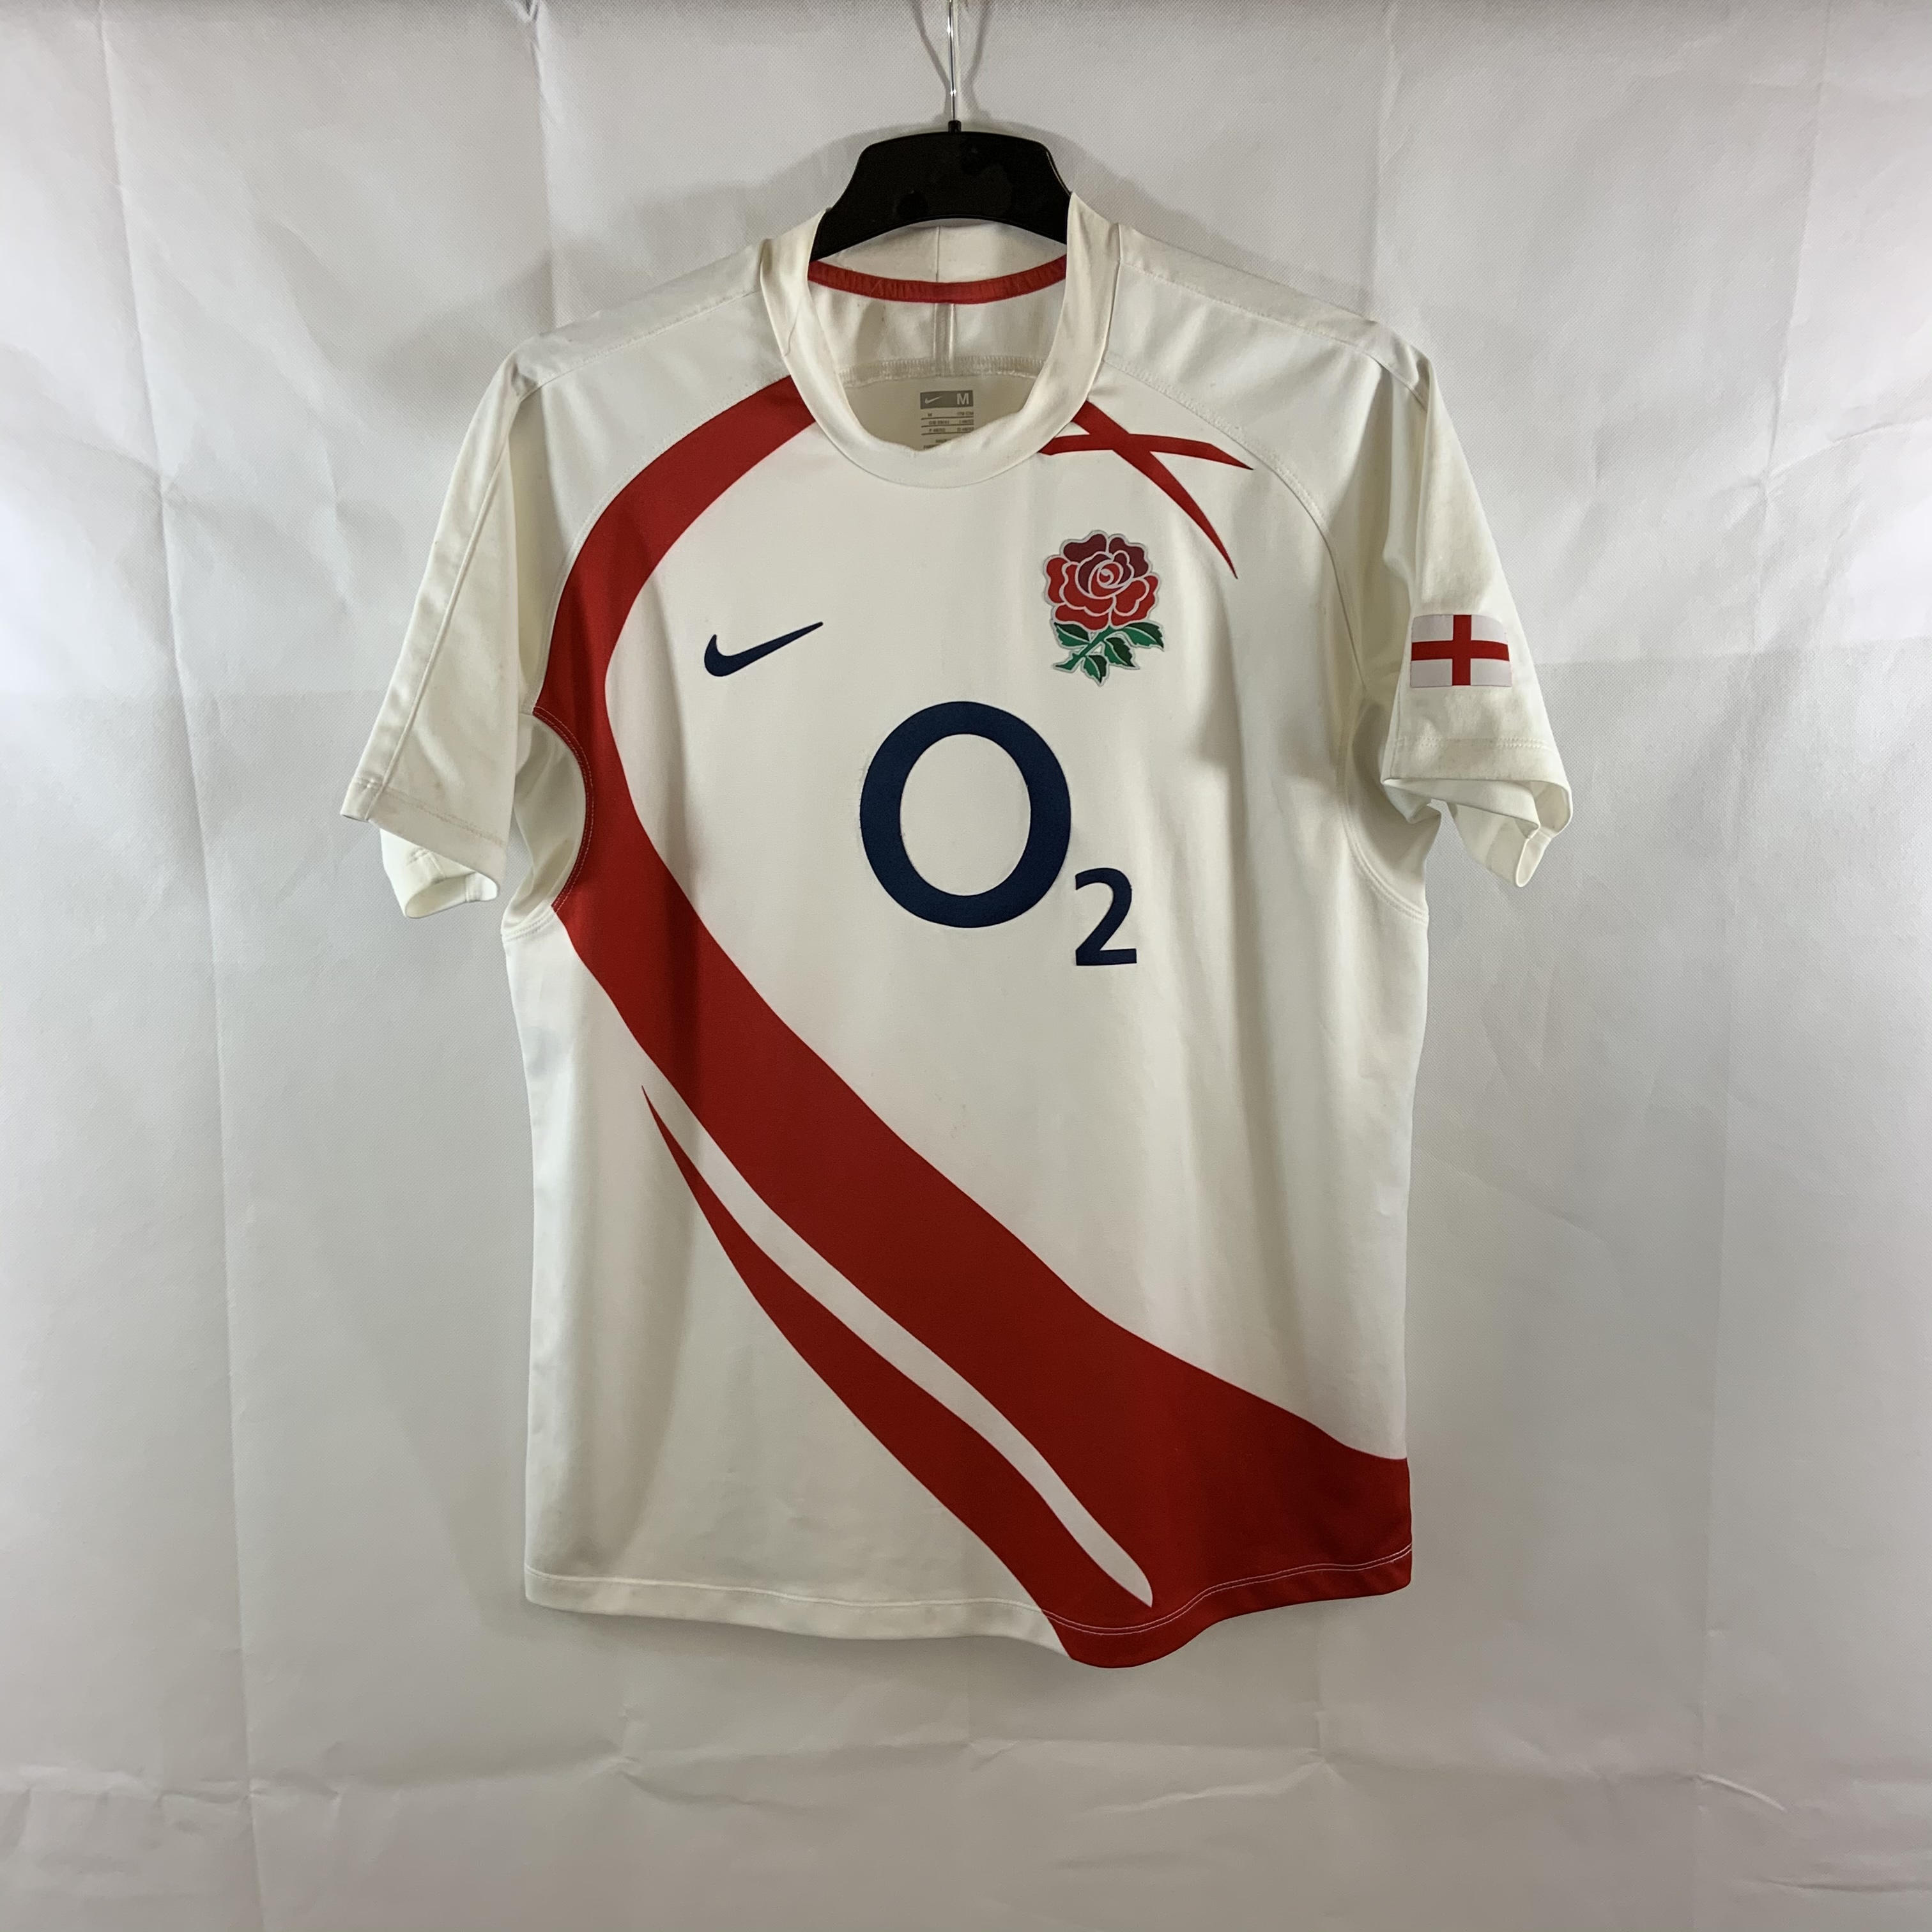 England Home Rugby Shirt 2007/09 Adults Medium Nike E753 Historic Football Shirts